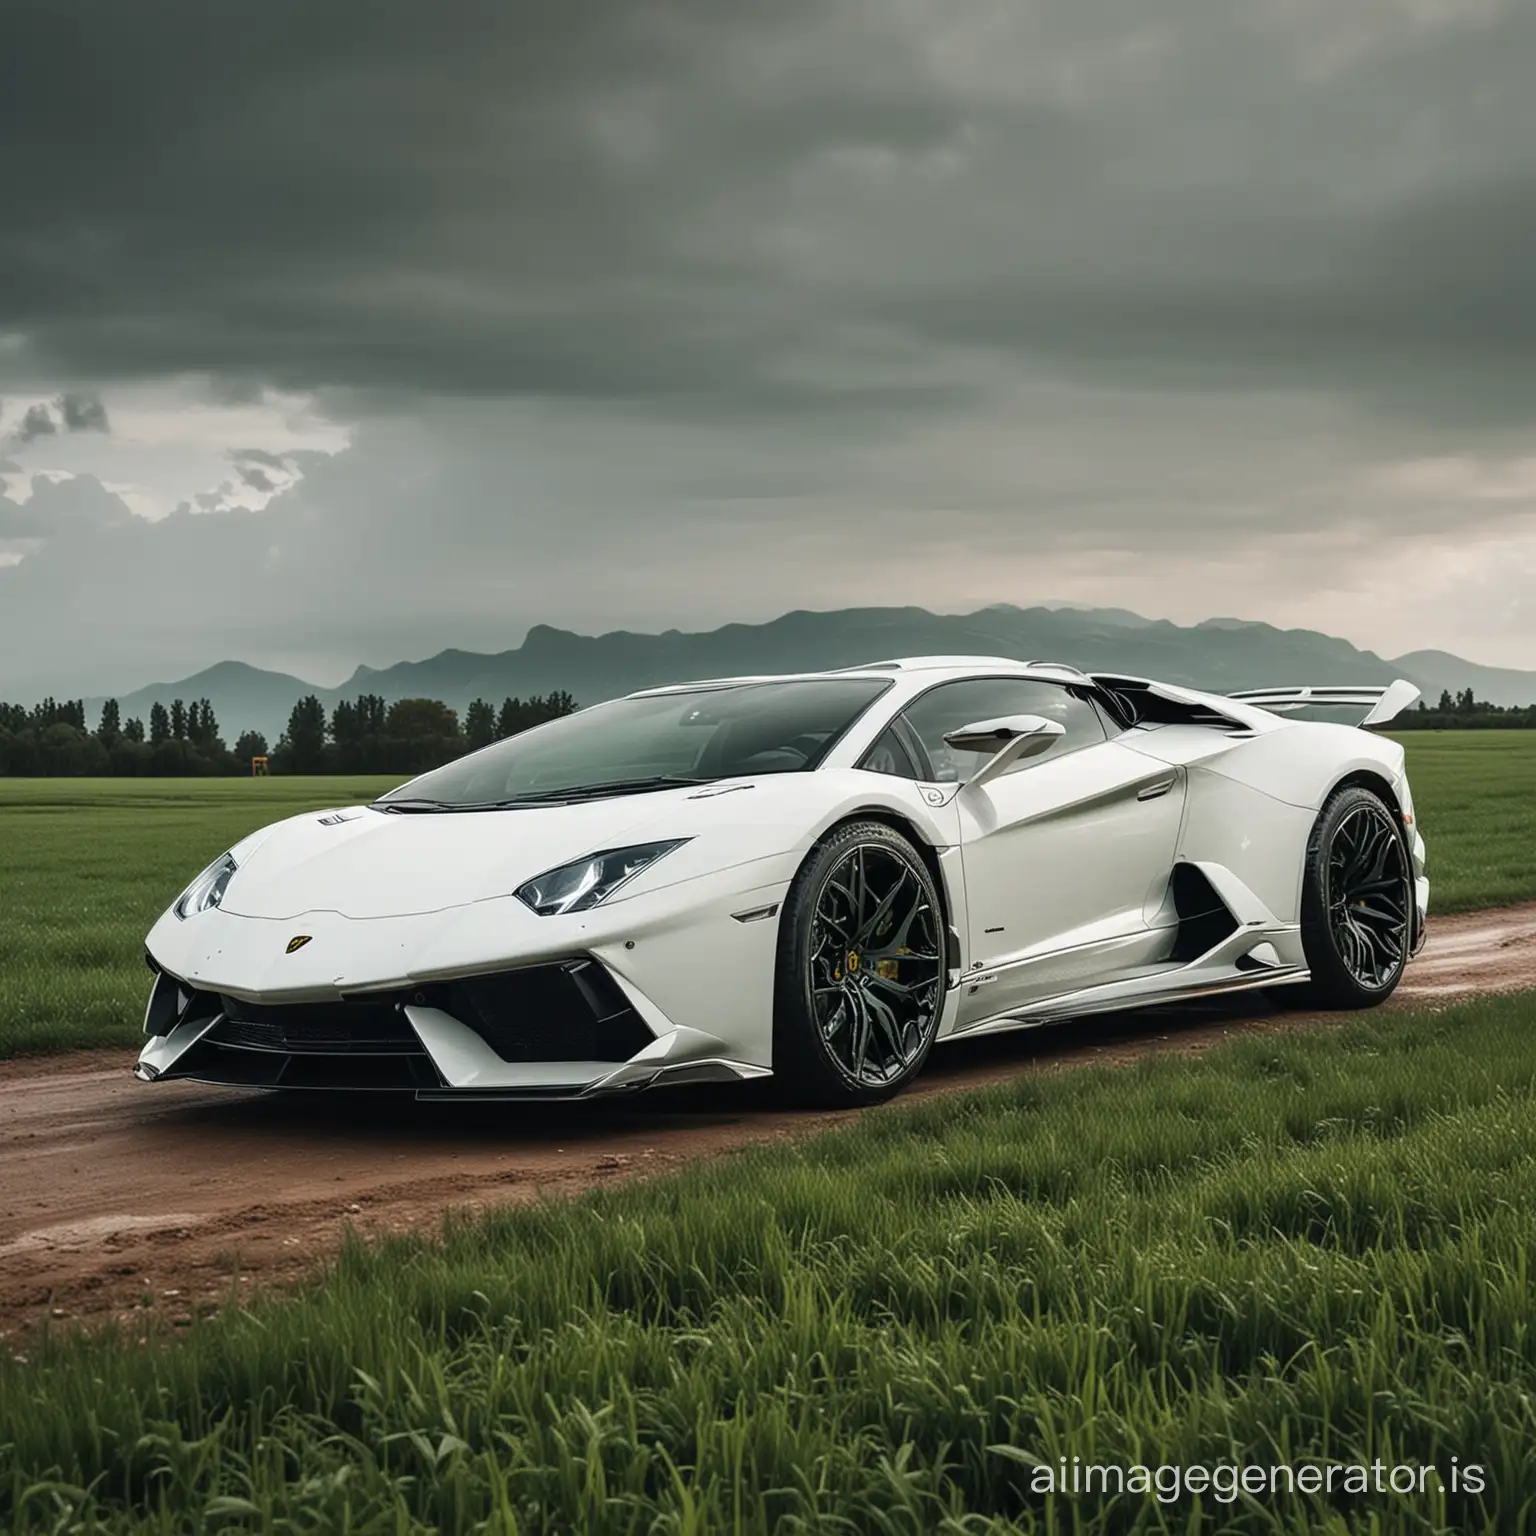 A very advance and futuristic vibes white Lamborghini car in green land